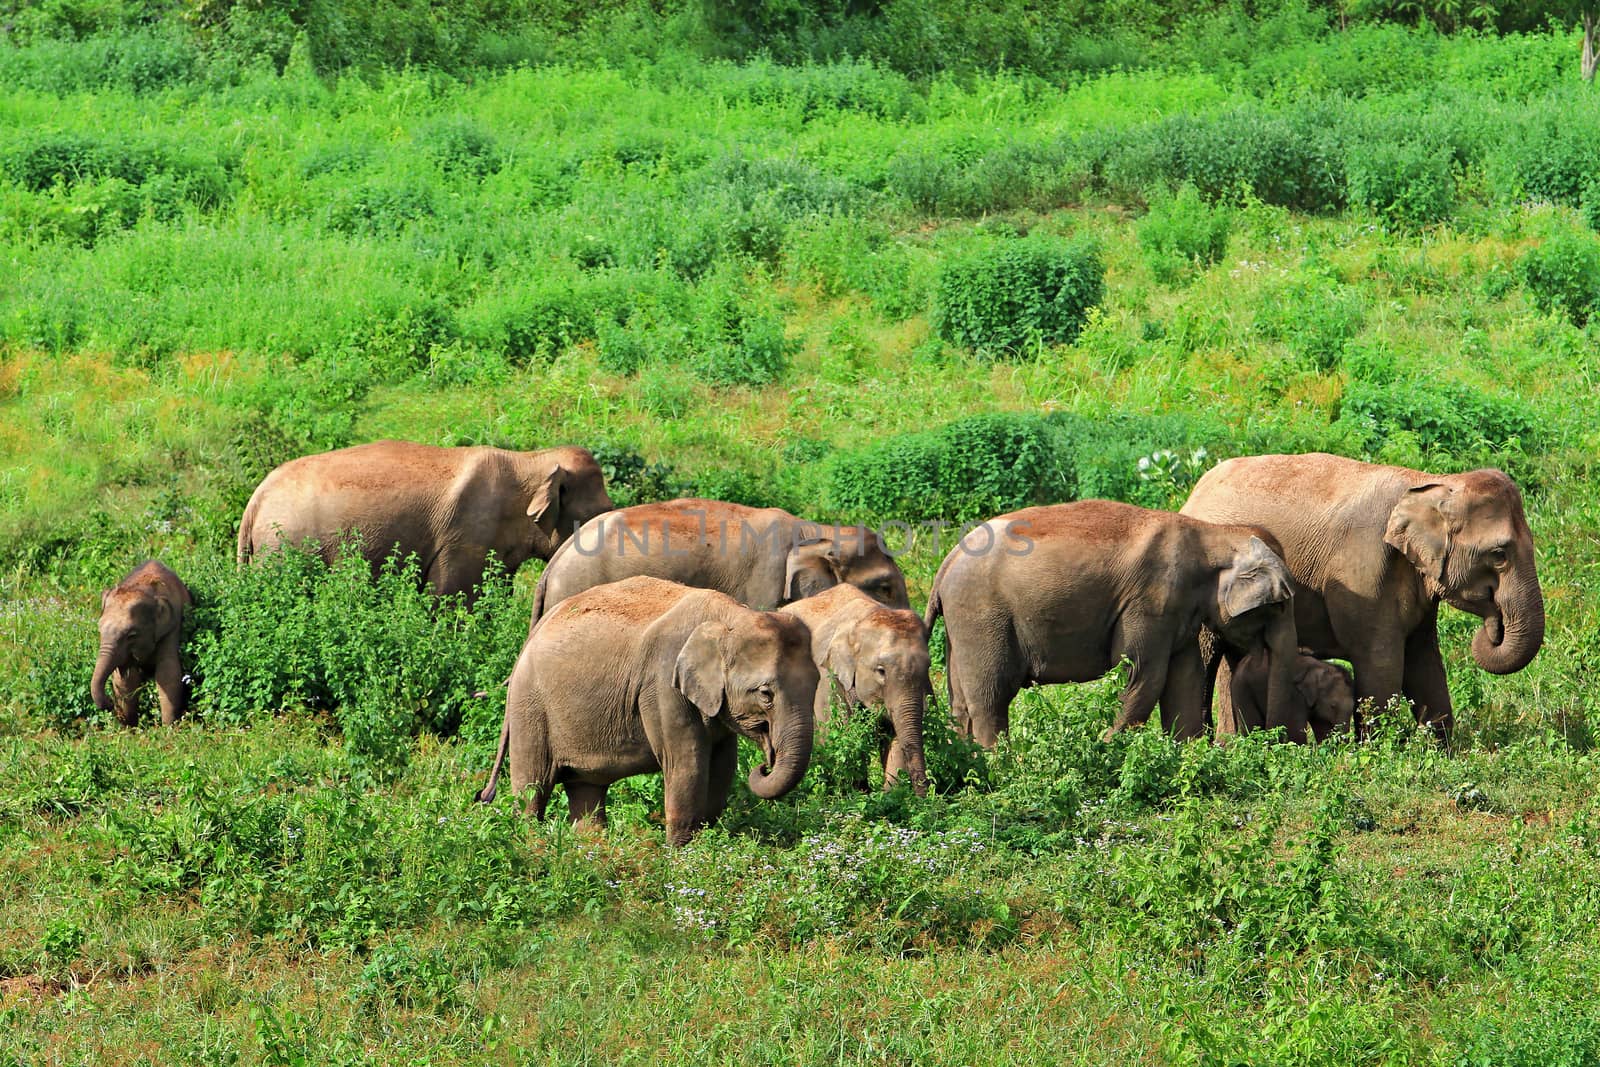 Asia wild elephants at Kui buri National Park by Mercedess